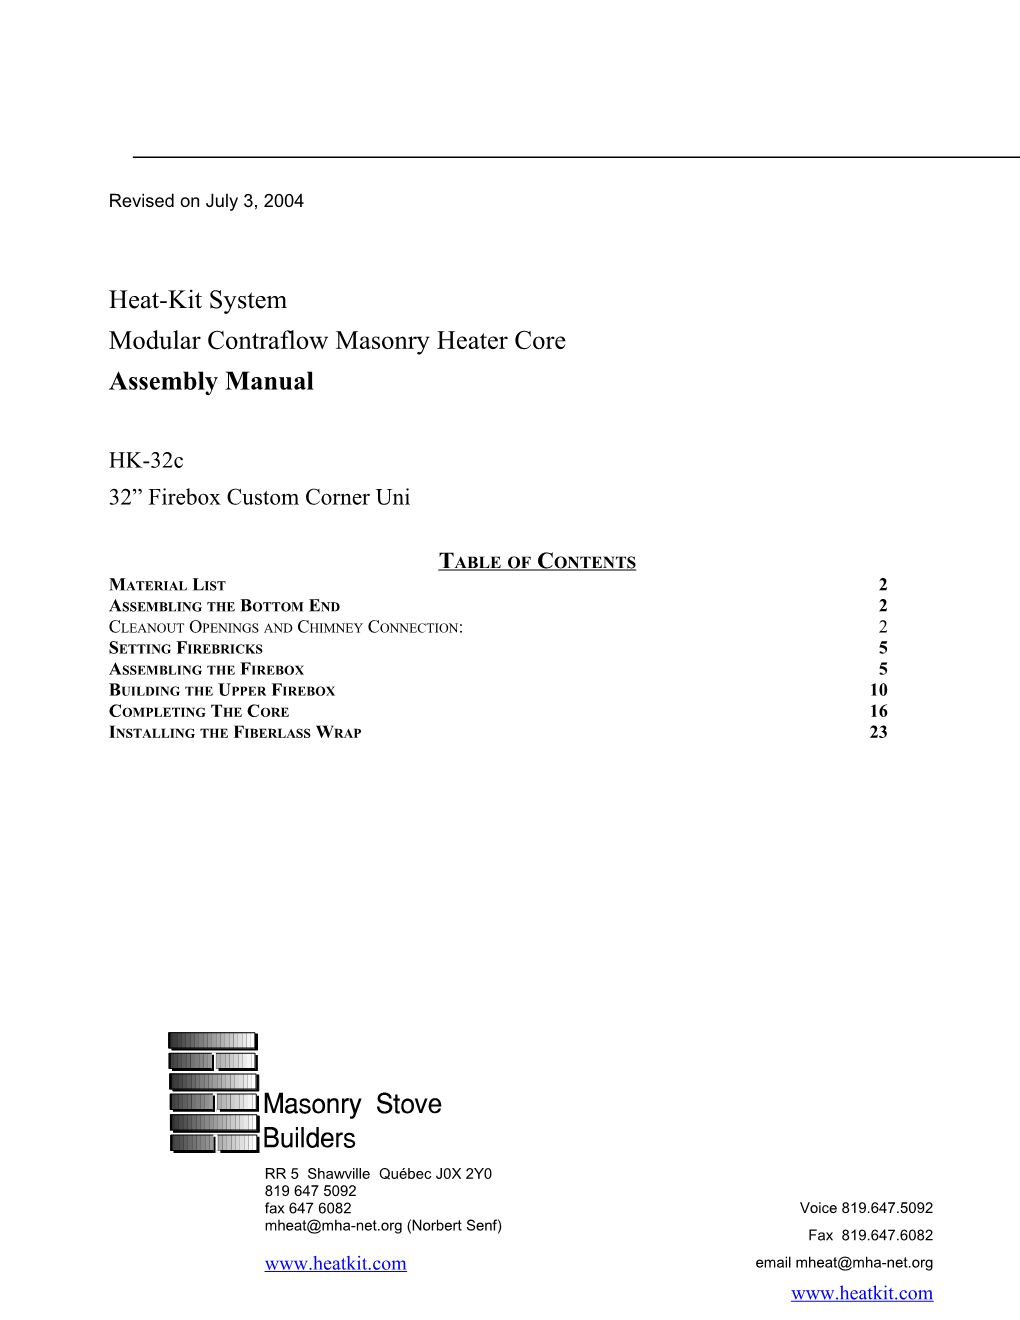 Modular Contraflow Masonry Heater Core